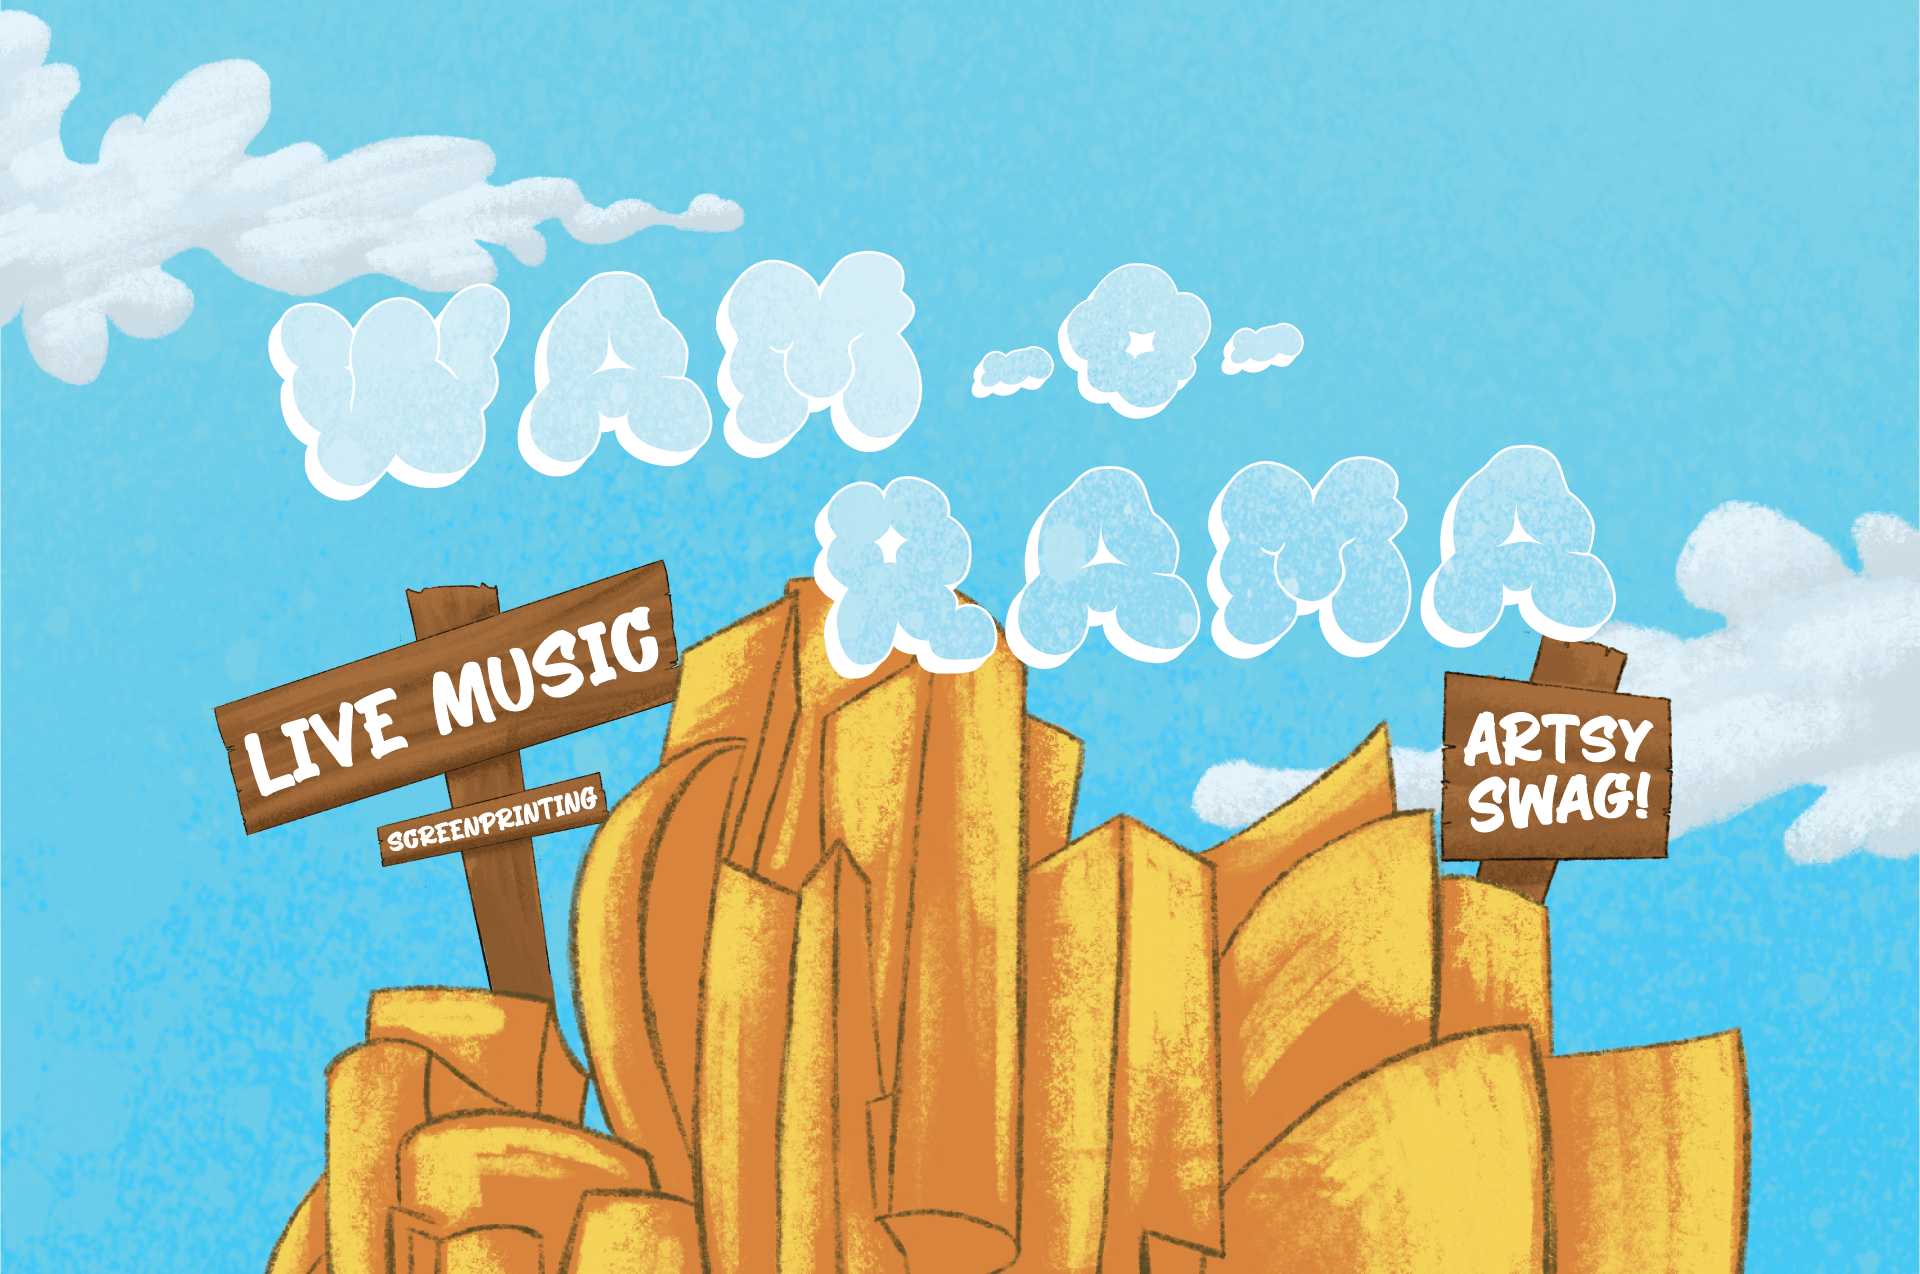 WAM-O-RAMA, LIFE MUSIC, ARTSY SWAG